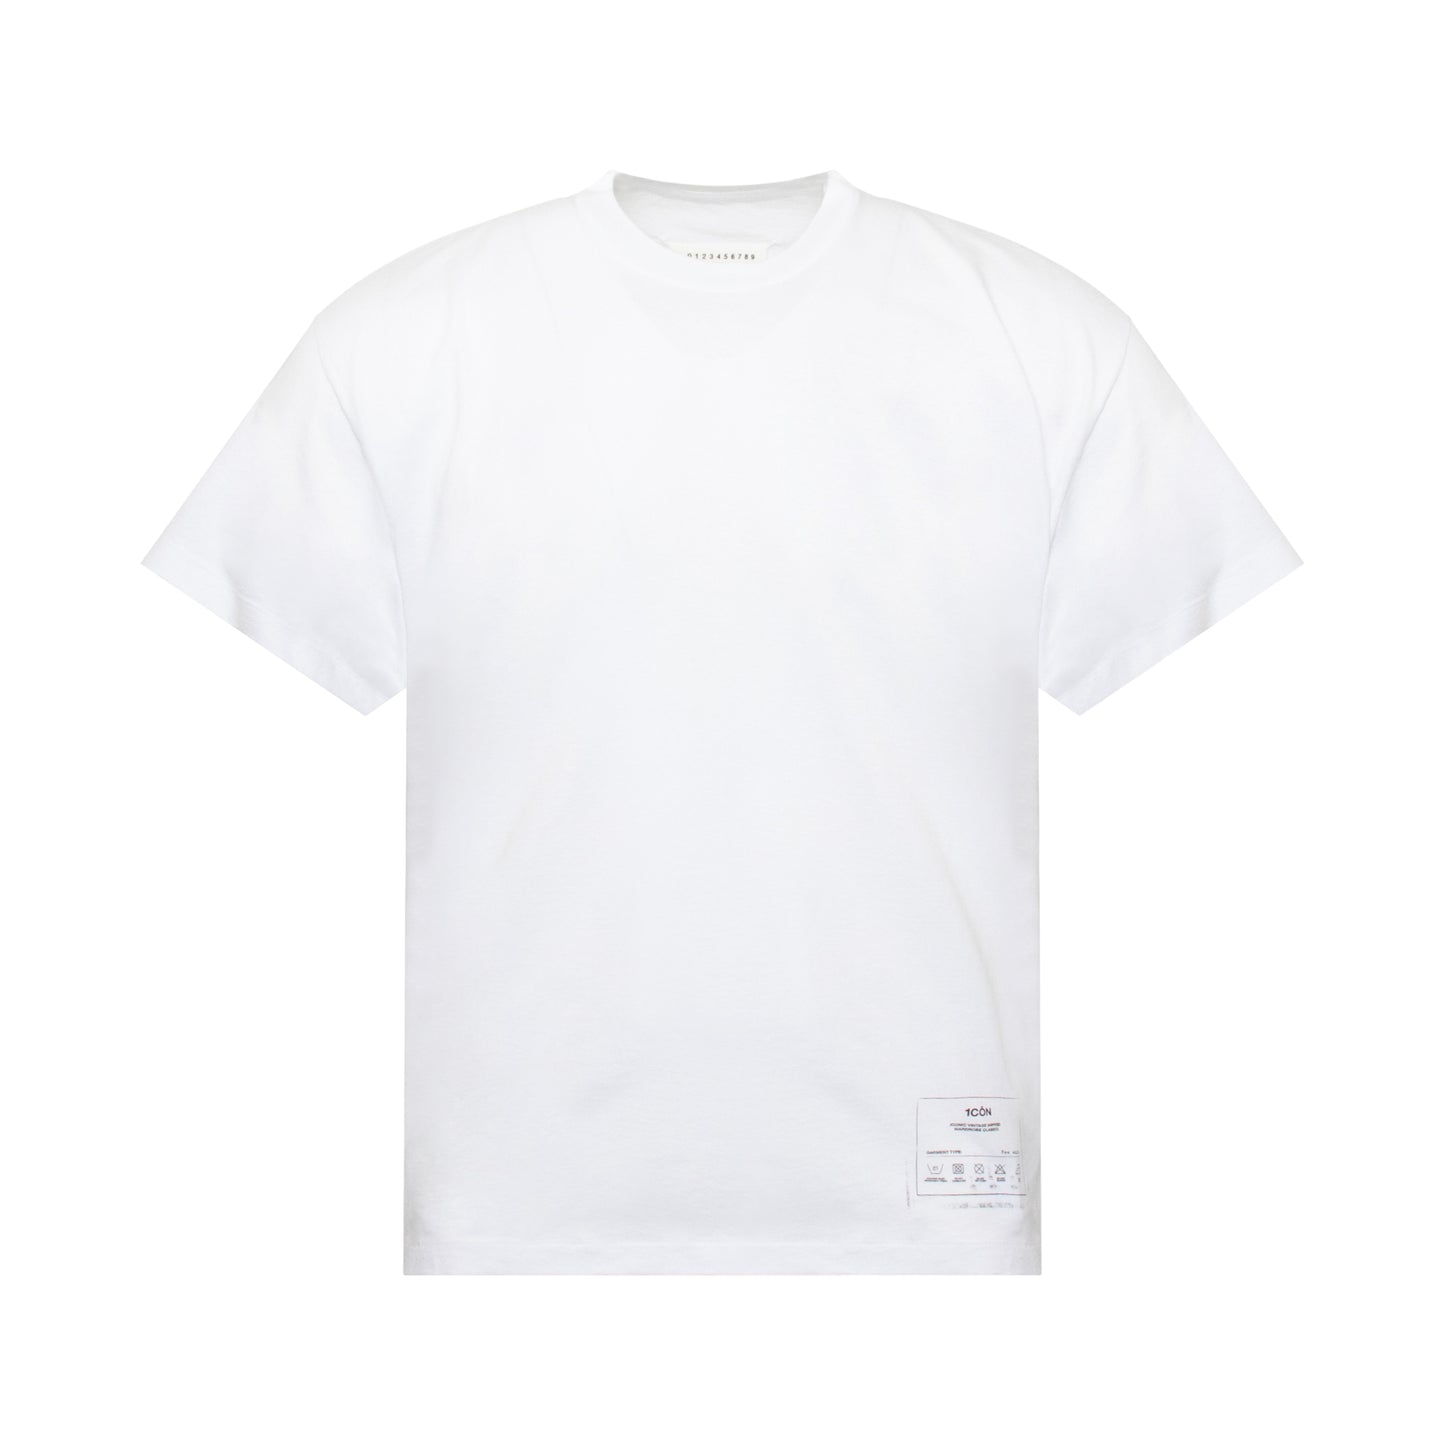 1CON Print T-Shirt in White